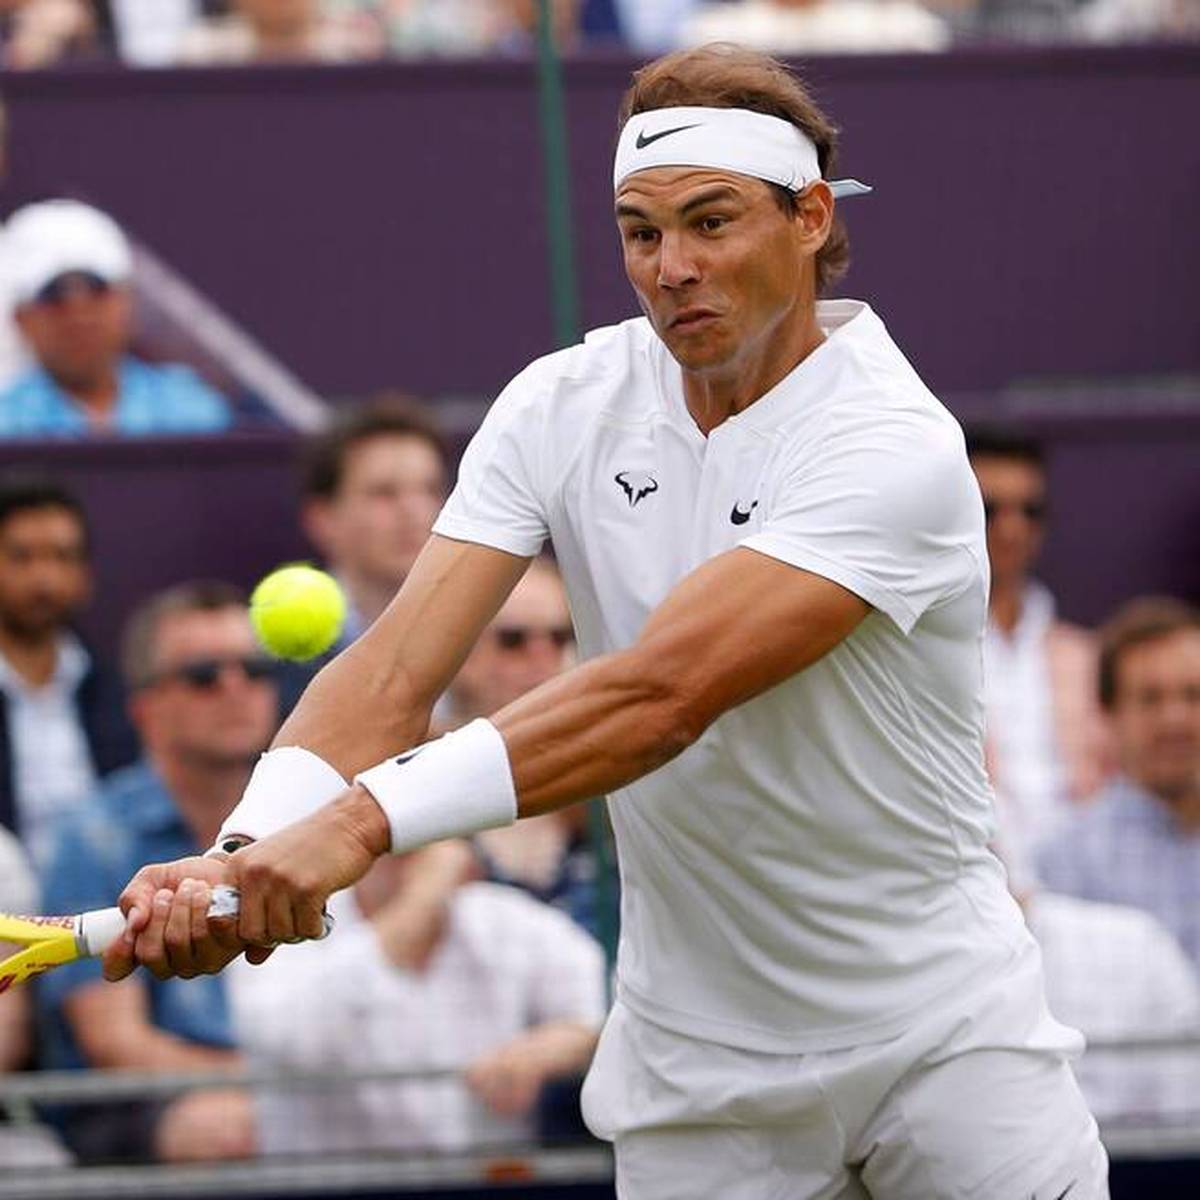 Der Grand-Slam-Rekordsieger Rafael Nadal hat kurz vor dem Start des Rasenklassikers in Wimbledon offenbar seine Fußprobleme in den Griff bekommen.